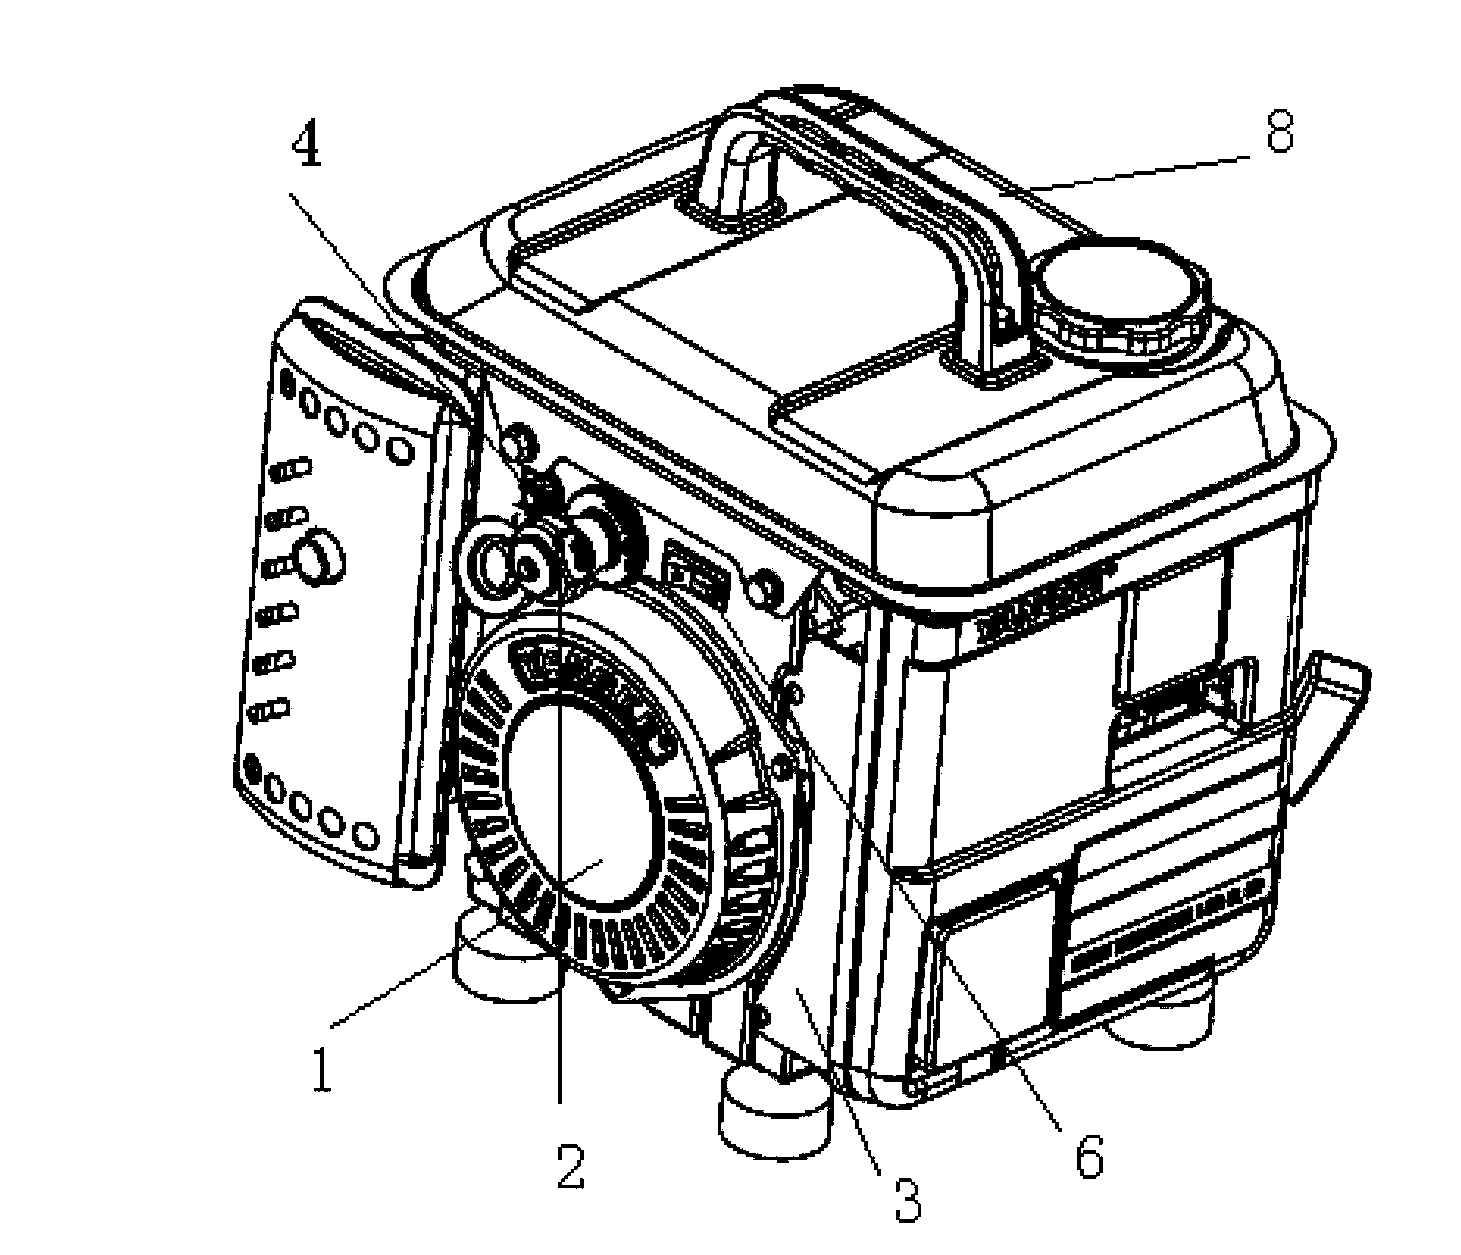 Portable generator set with cigarette lighter